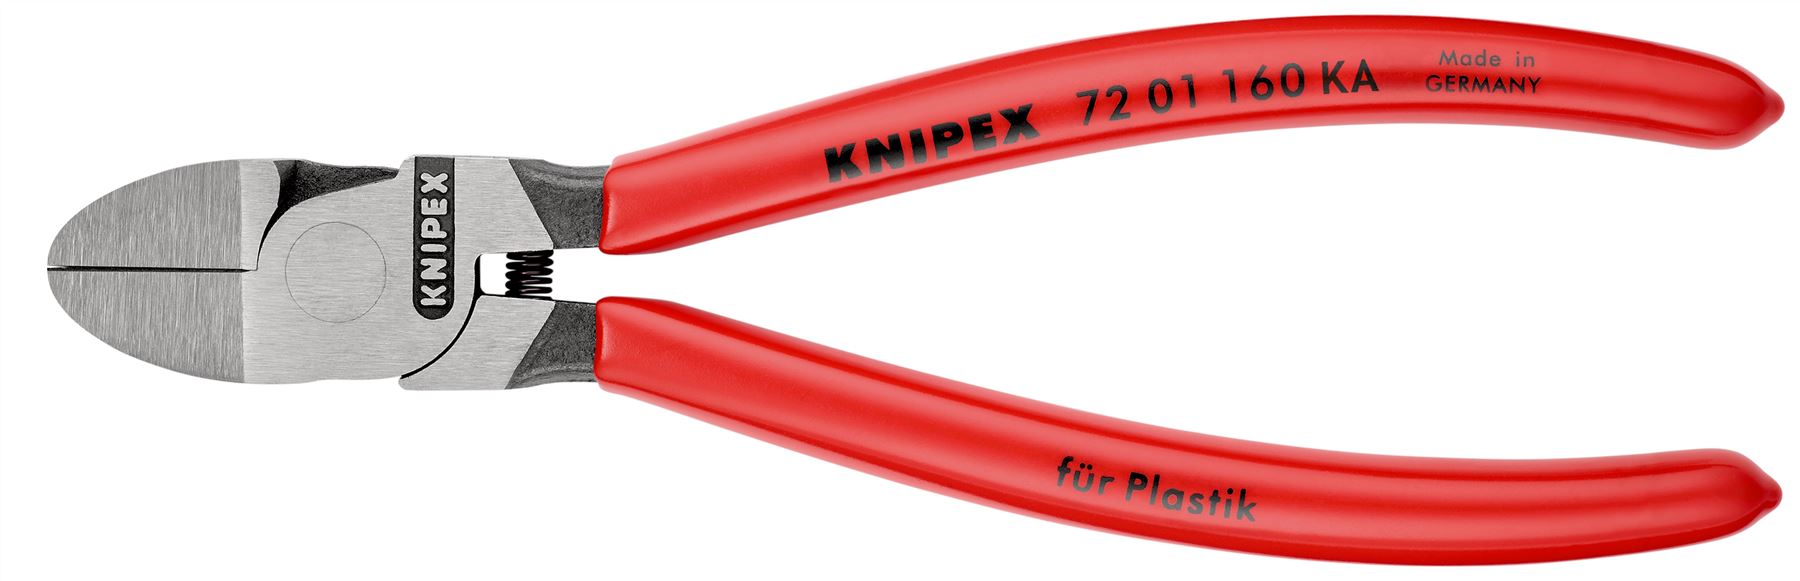 Knipex Diagonal Cutter for Plastics Round Head Pliers 160mm 72 01 160 KA